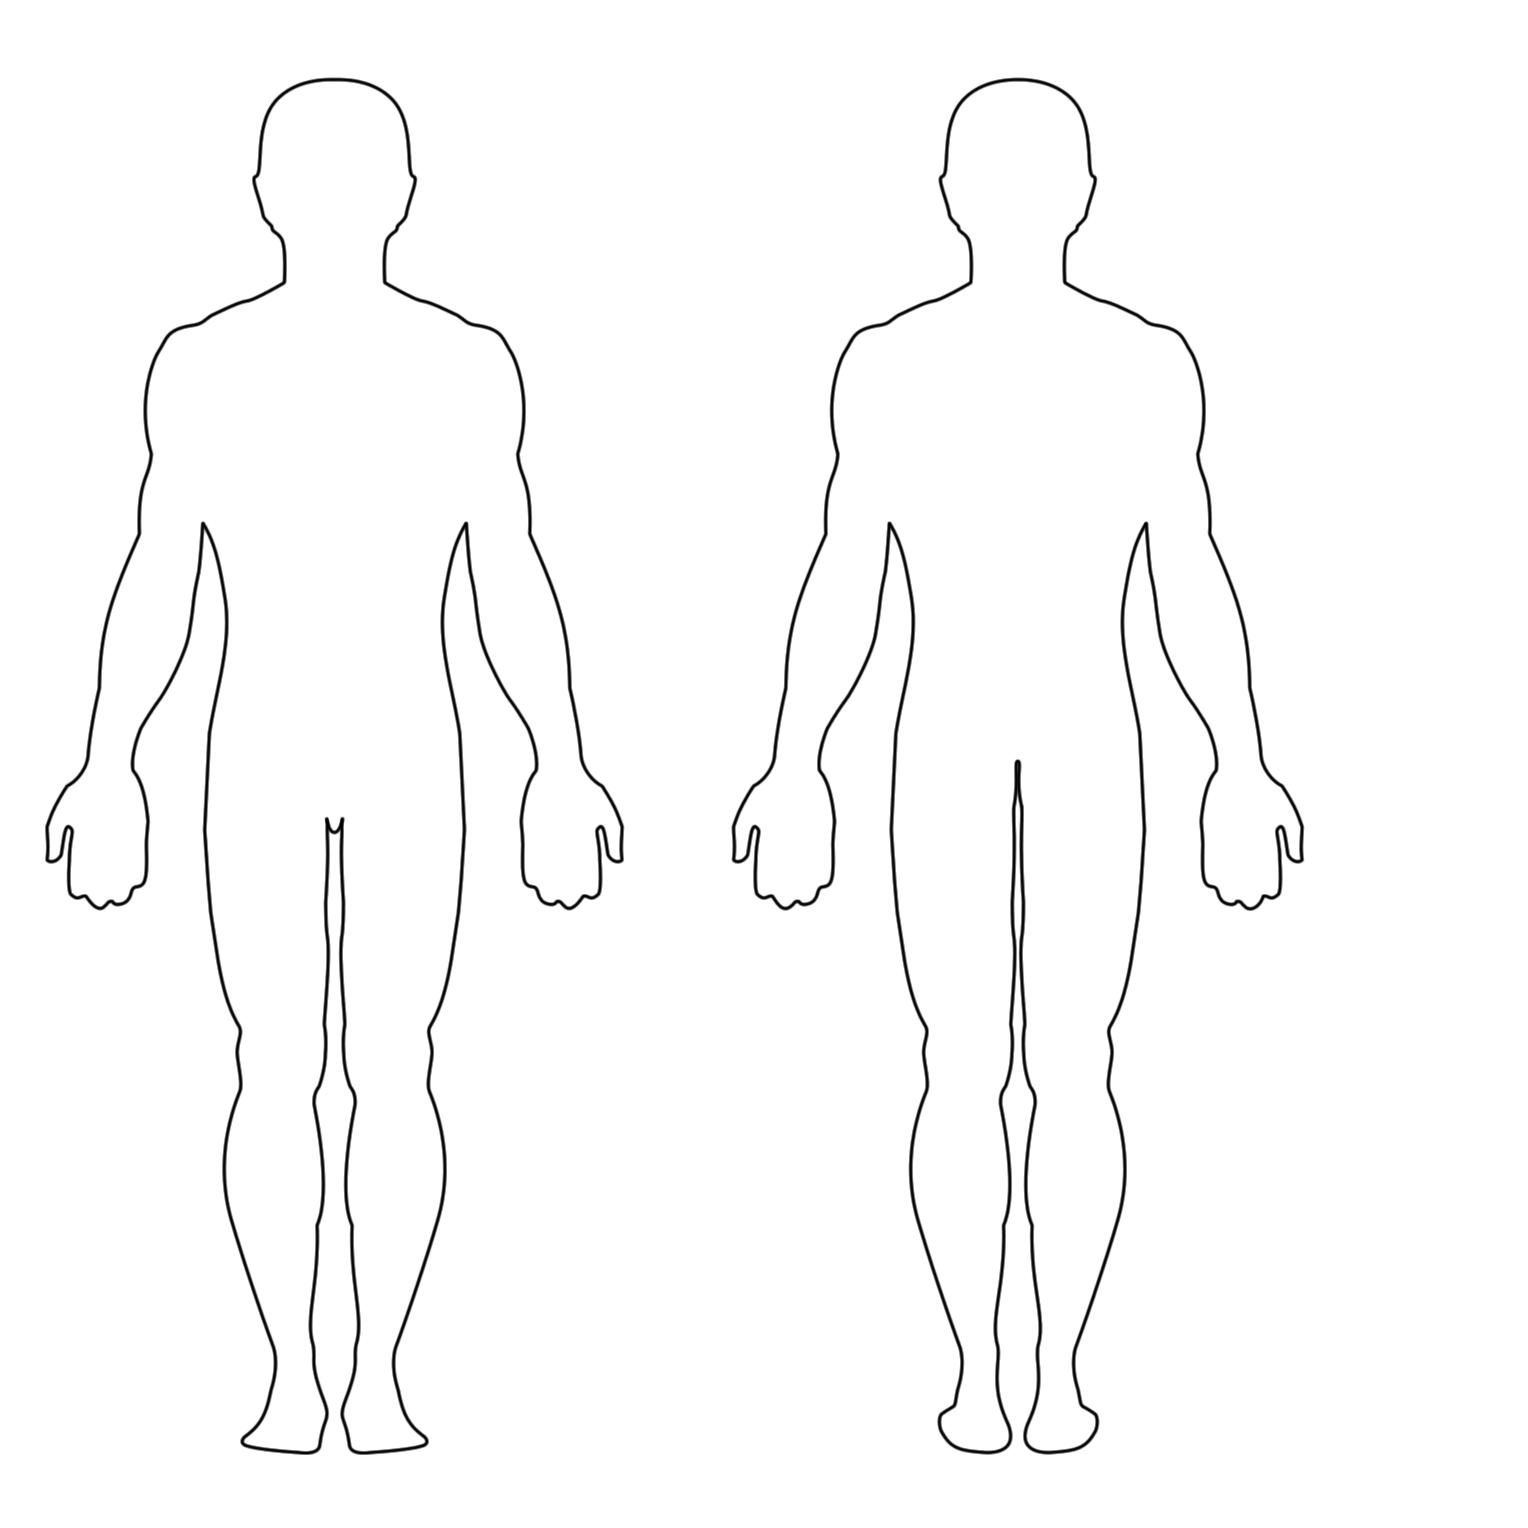 Туловище человека. Контур человека спереди и сзади. Контур тела человека спереди. Человек схематично. Контур человеческого тела.